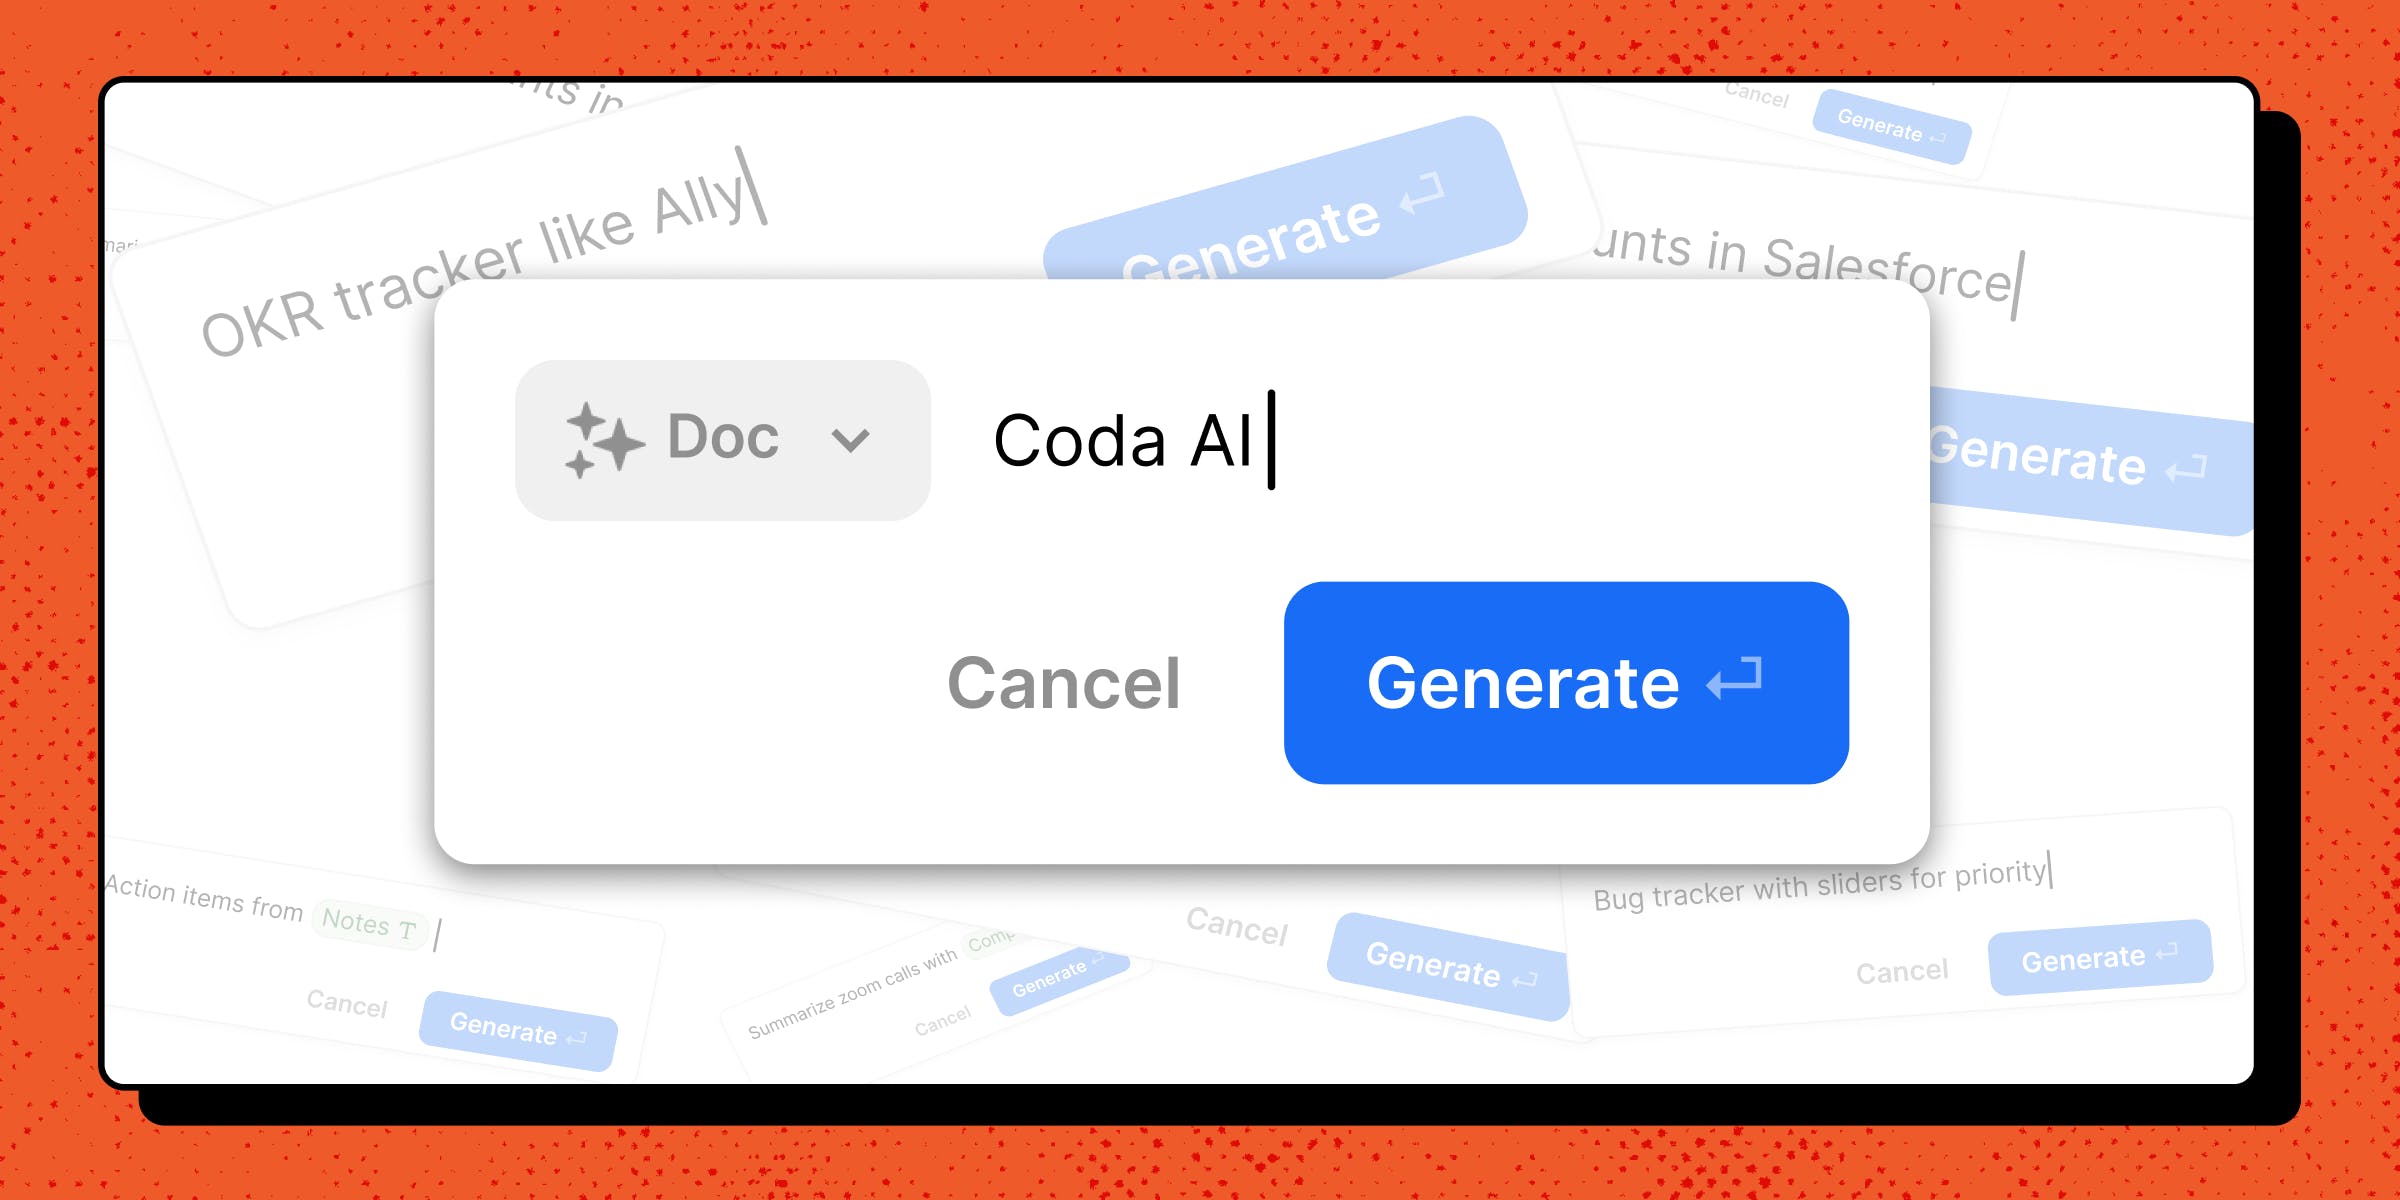 Coda AI - A platform to streamline workflow processes